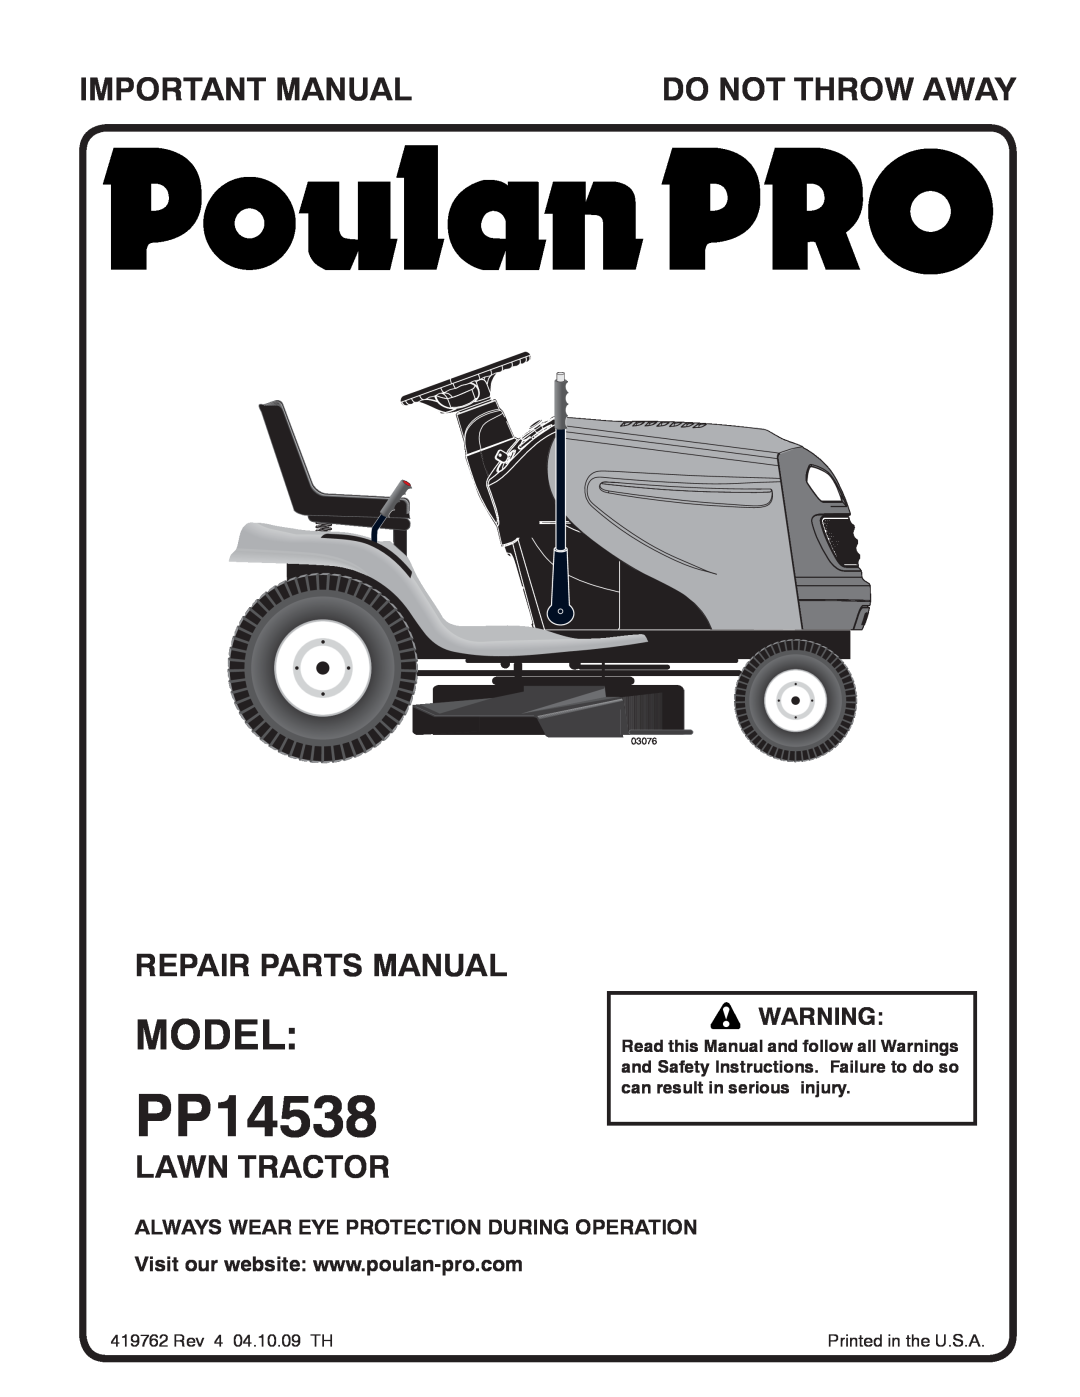 Poulan 96011027800 manual PP14538, Model, Important Manual, Do Not Throw Away, Repair Parts Manual, Lawn Tractor, 03076 